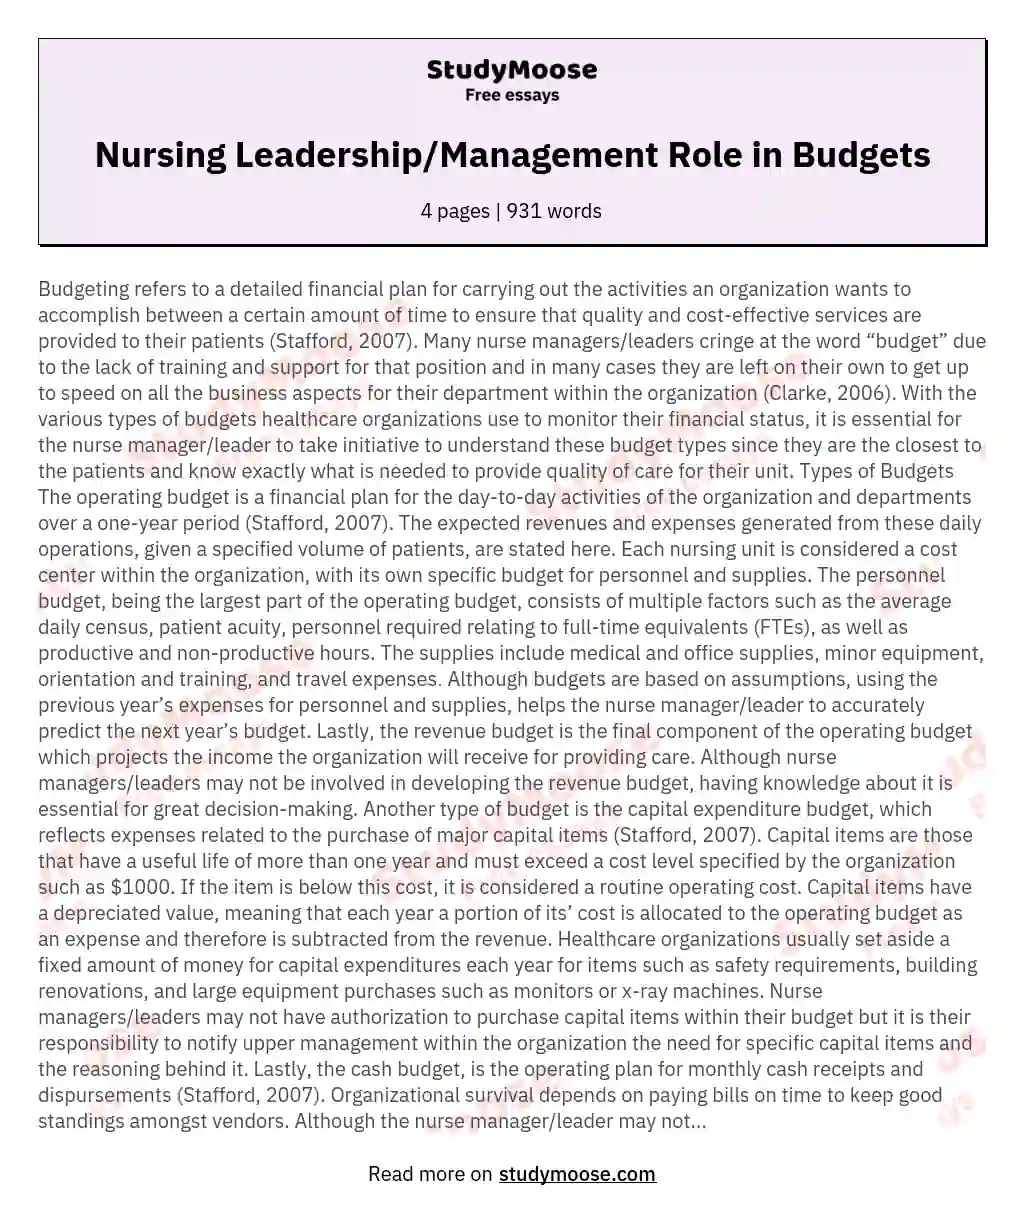 Nursing Leadership/Management Role in Budgets essay